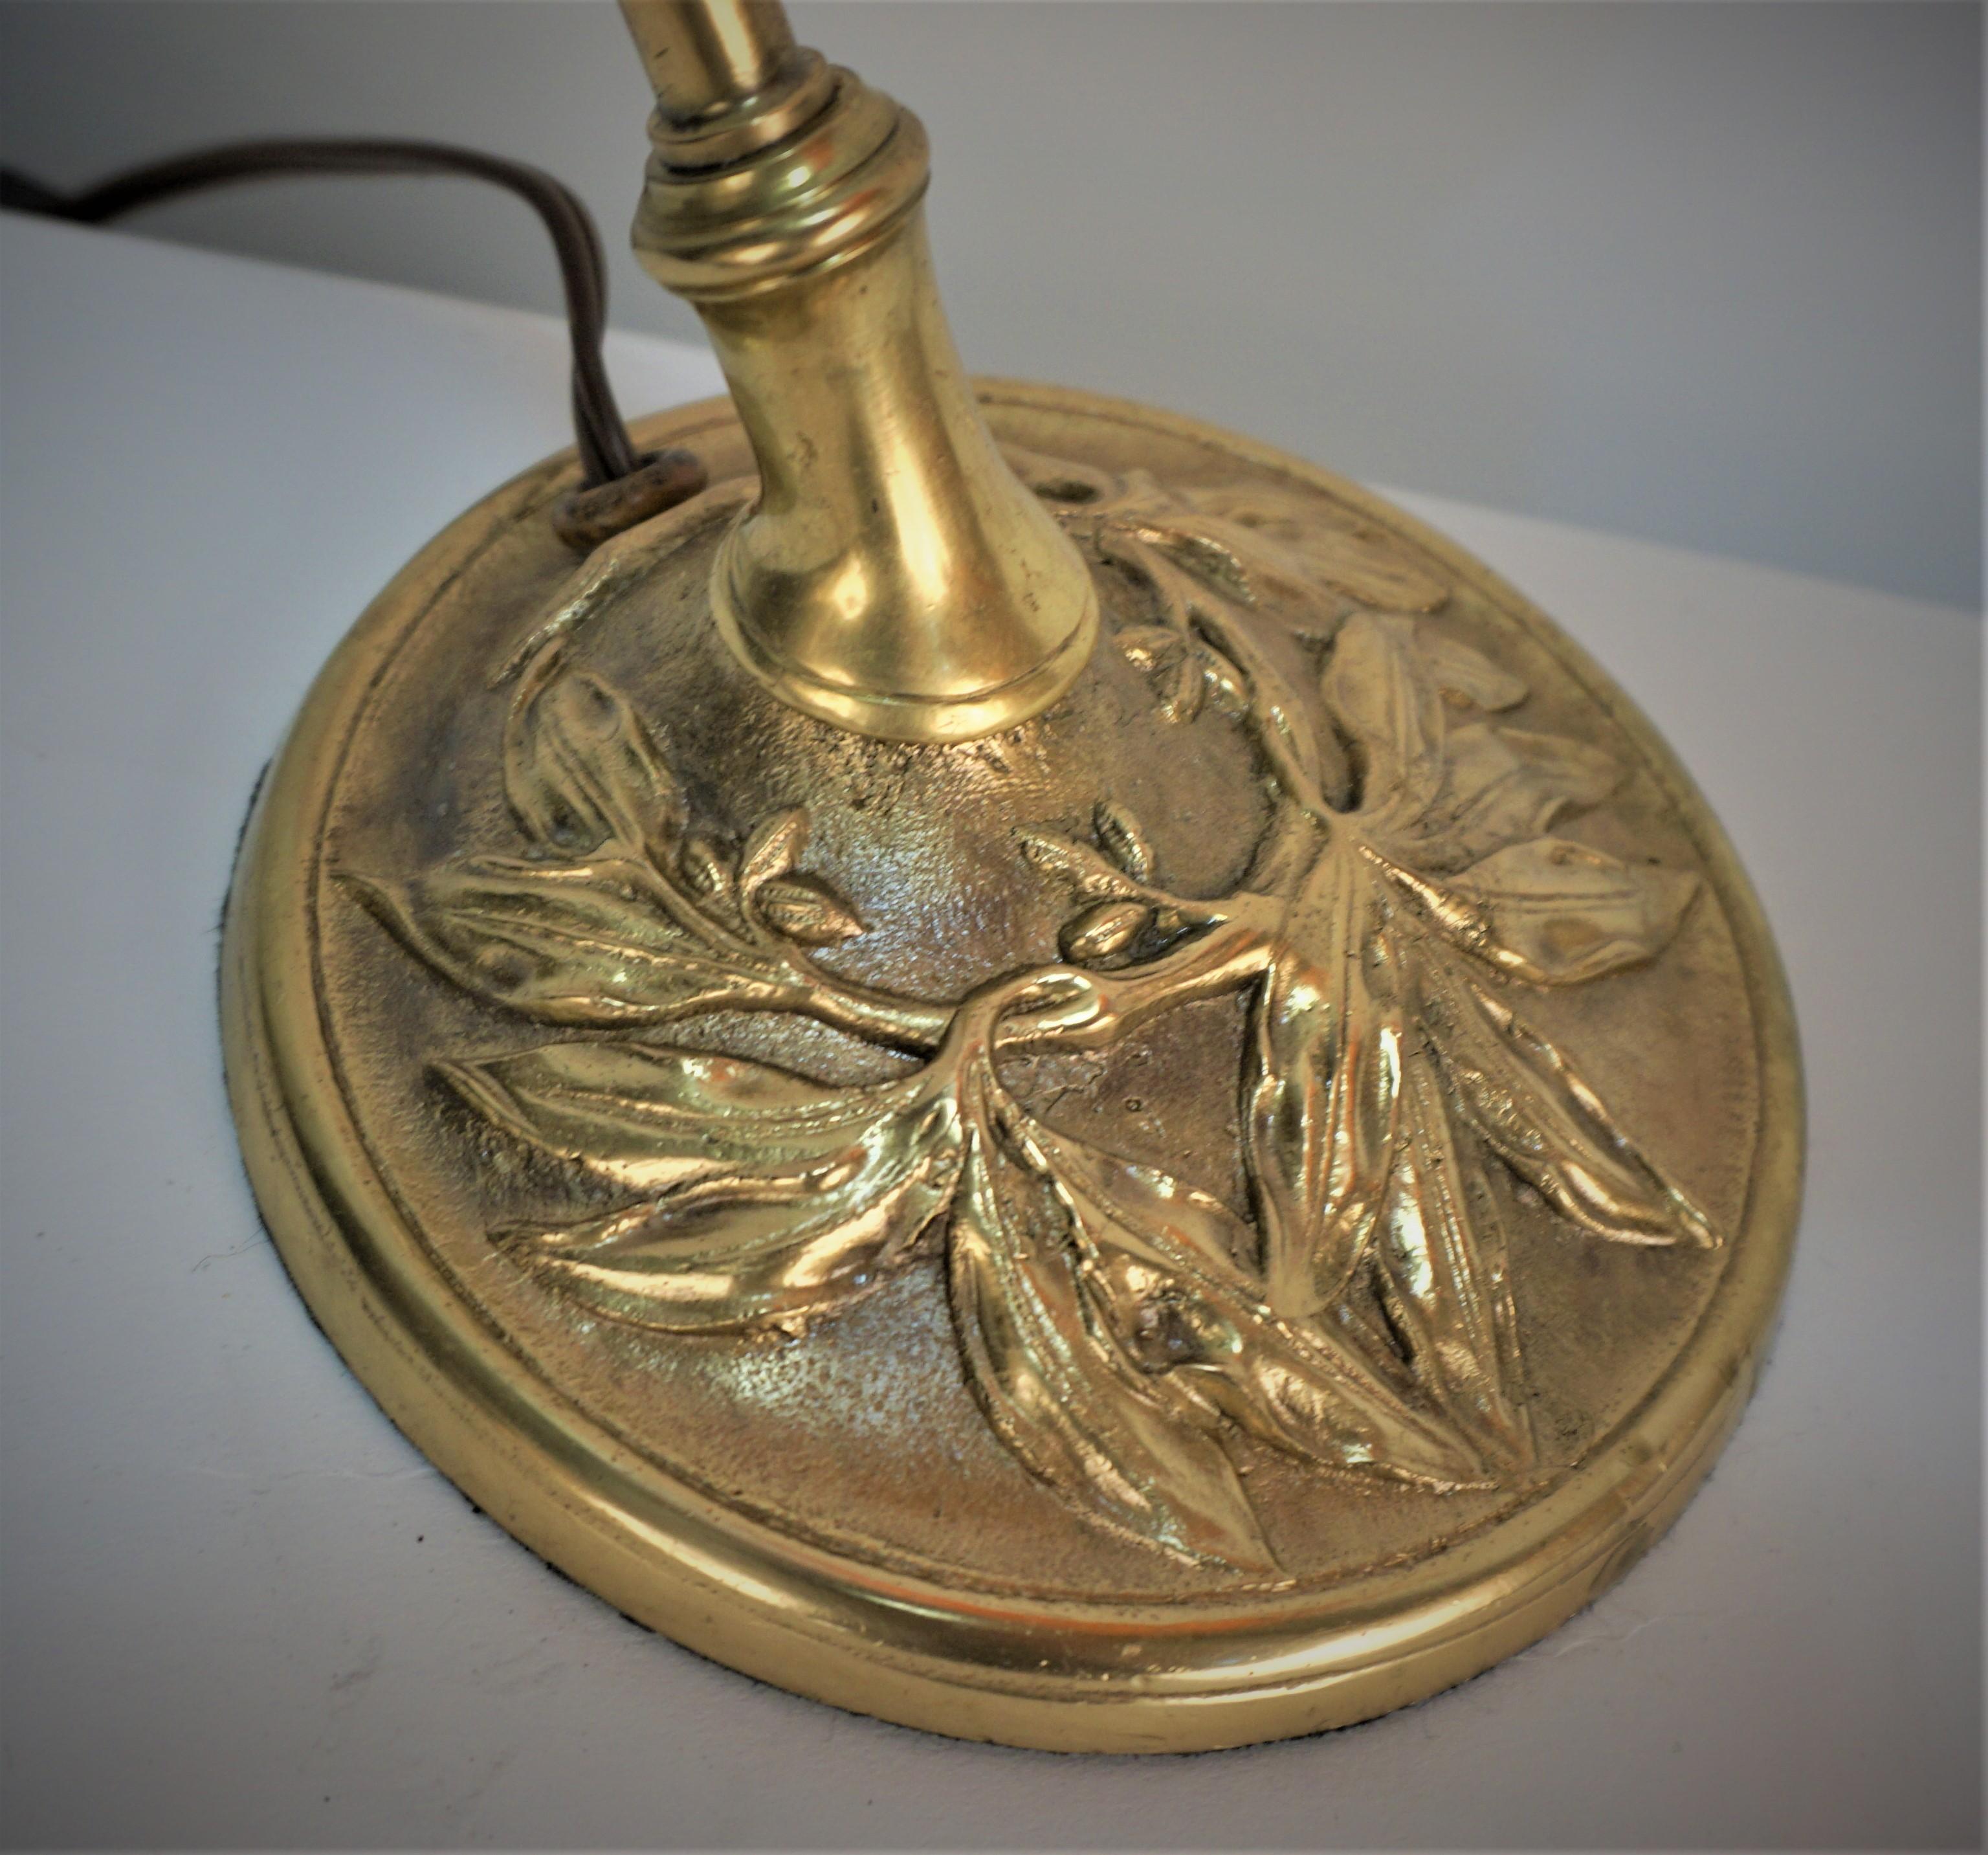 Beautiful blown art glass bronze flora design base table lamp by Daum.